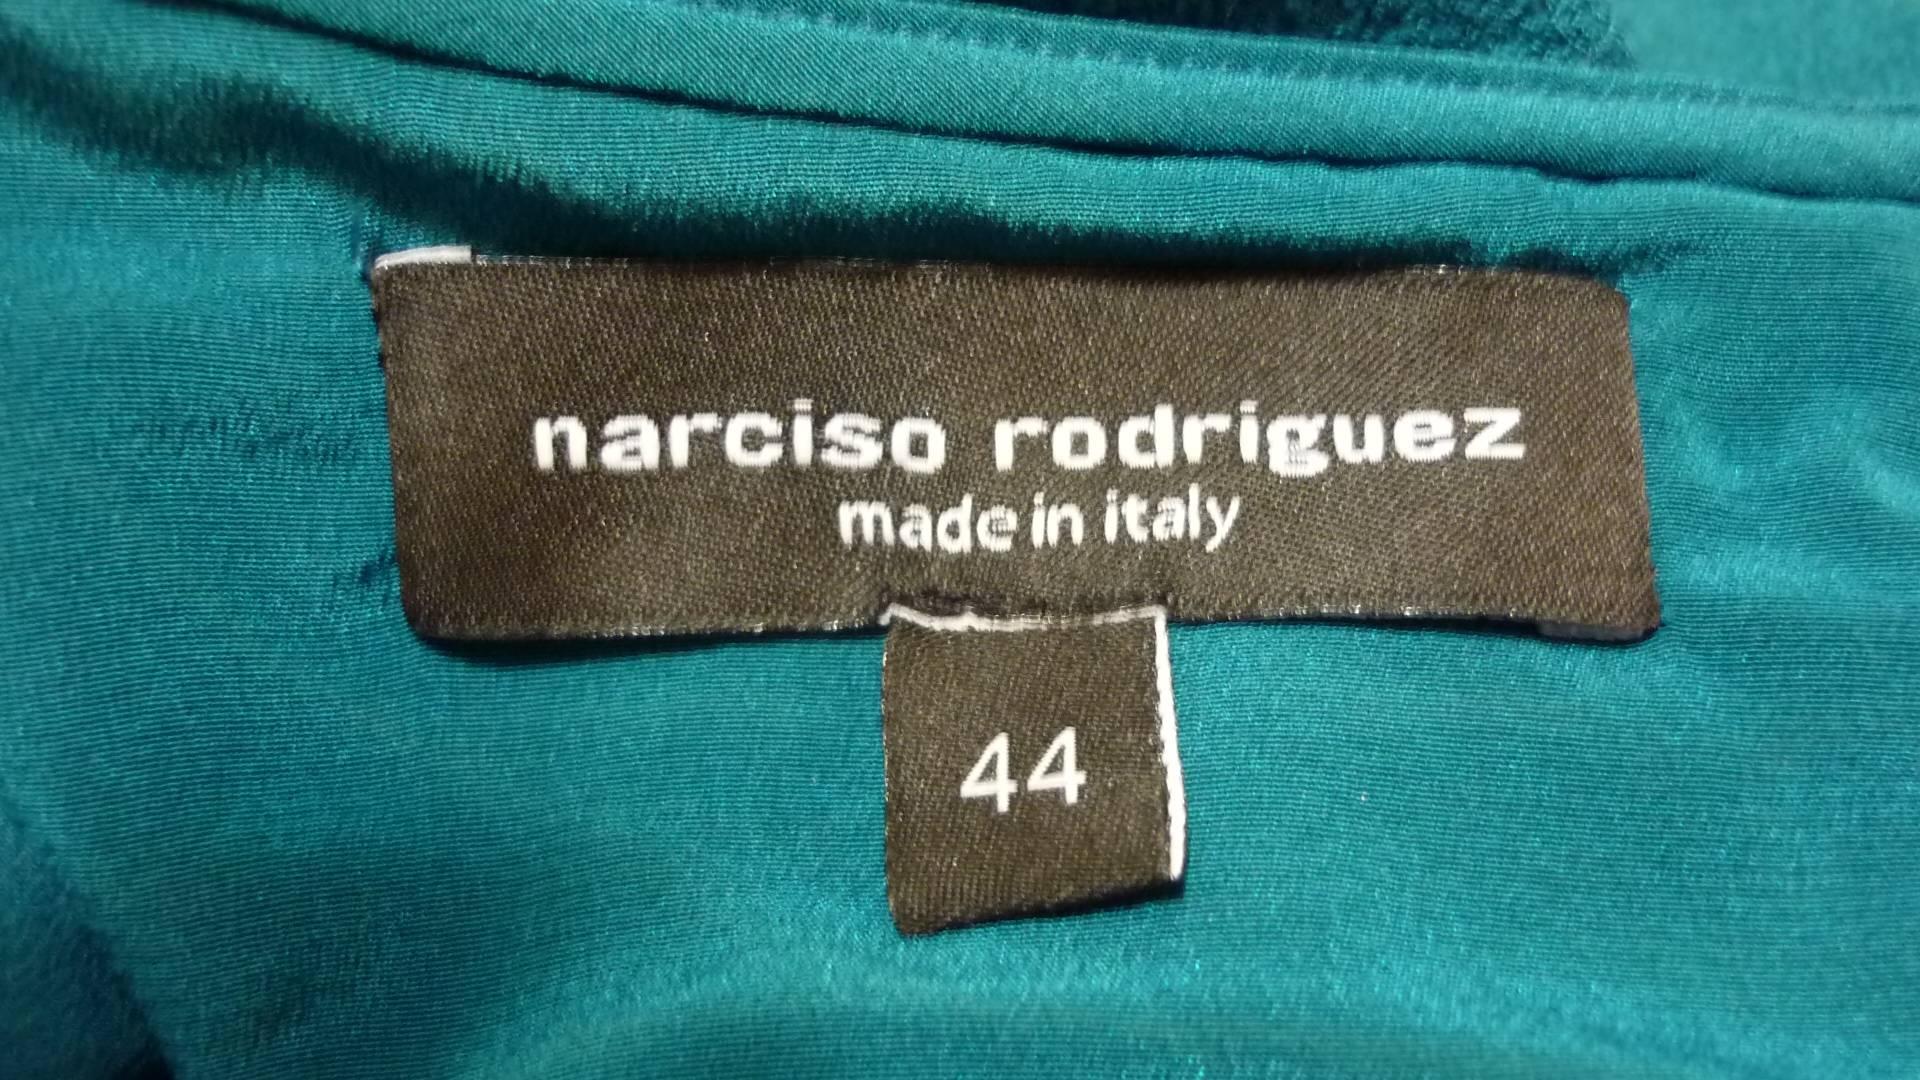 Wonderful Narciso Rodriguez Teal Scoop Neck Dress (44 Itl) 2